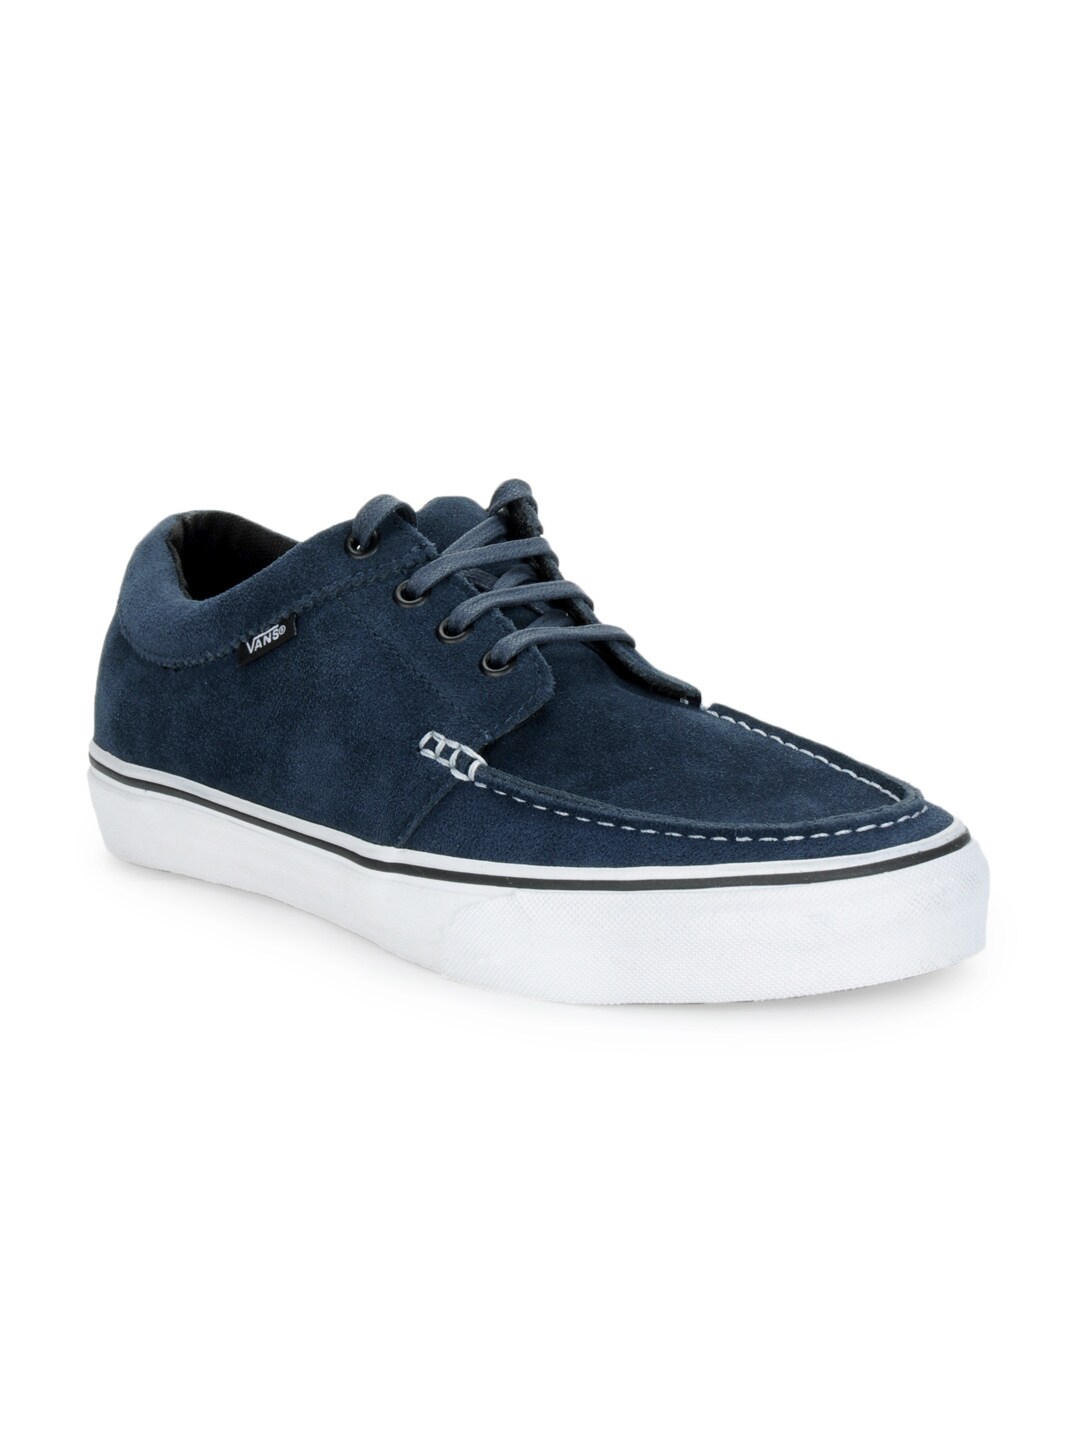 Vans Men Navy Blue Shoes